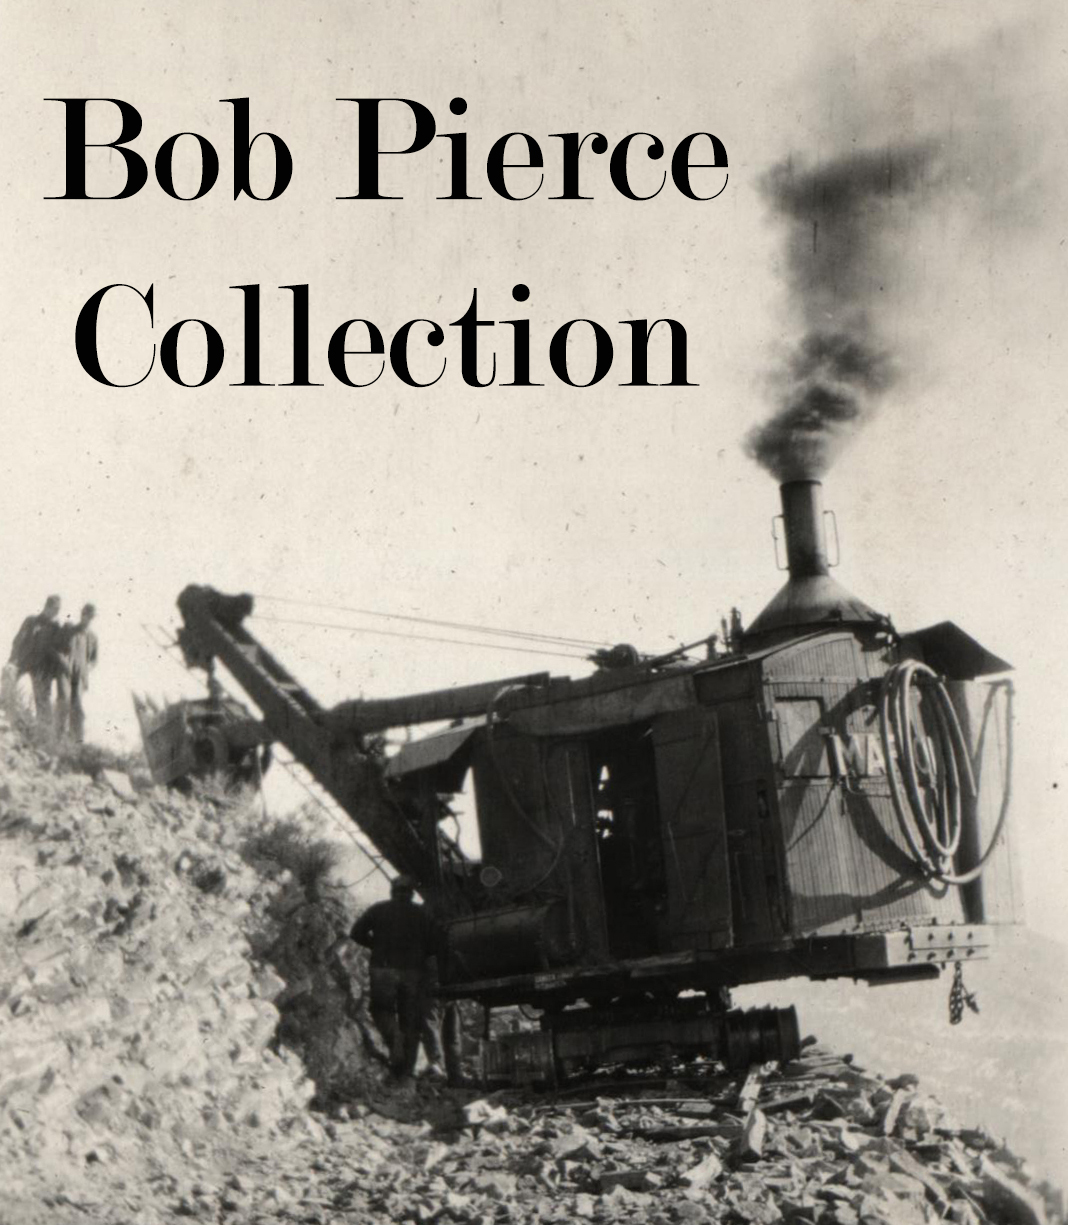 Bob Pierce Collection|urlencode